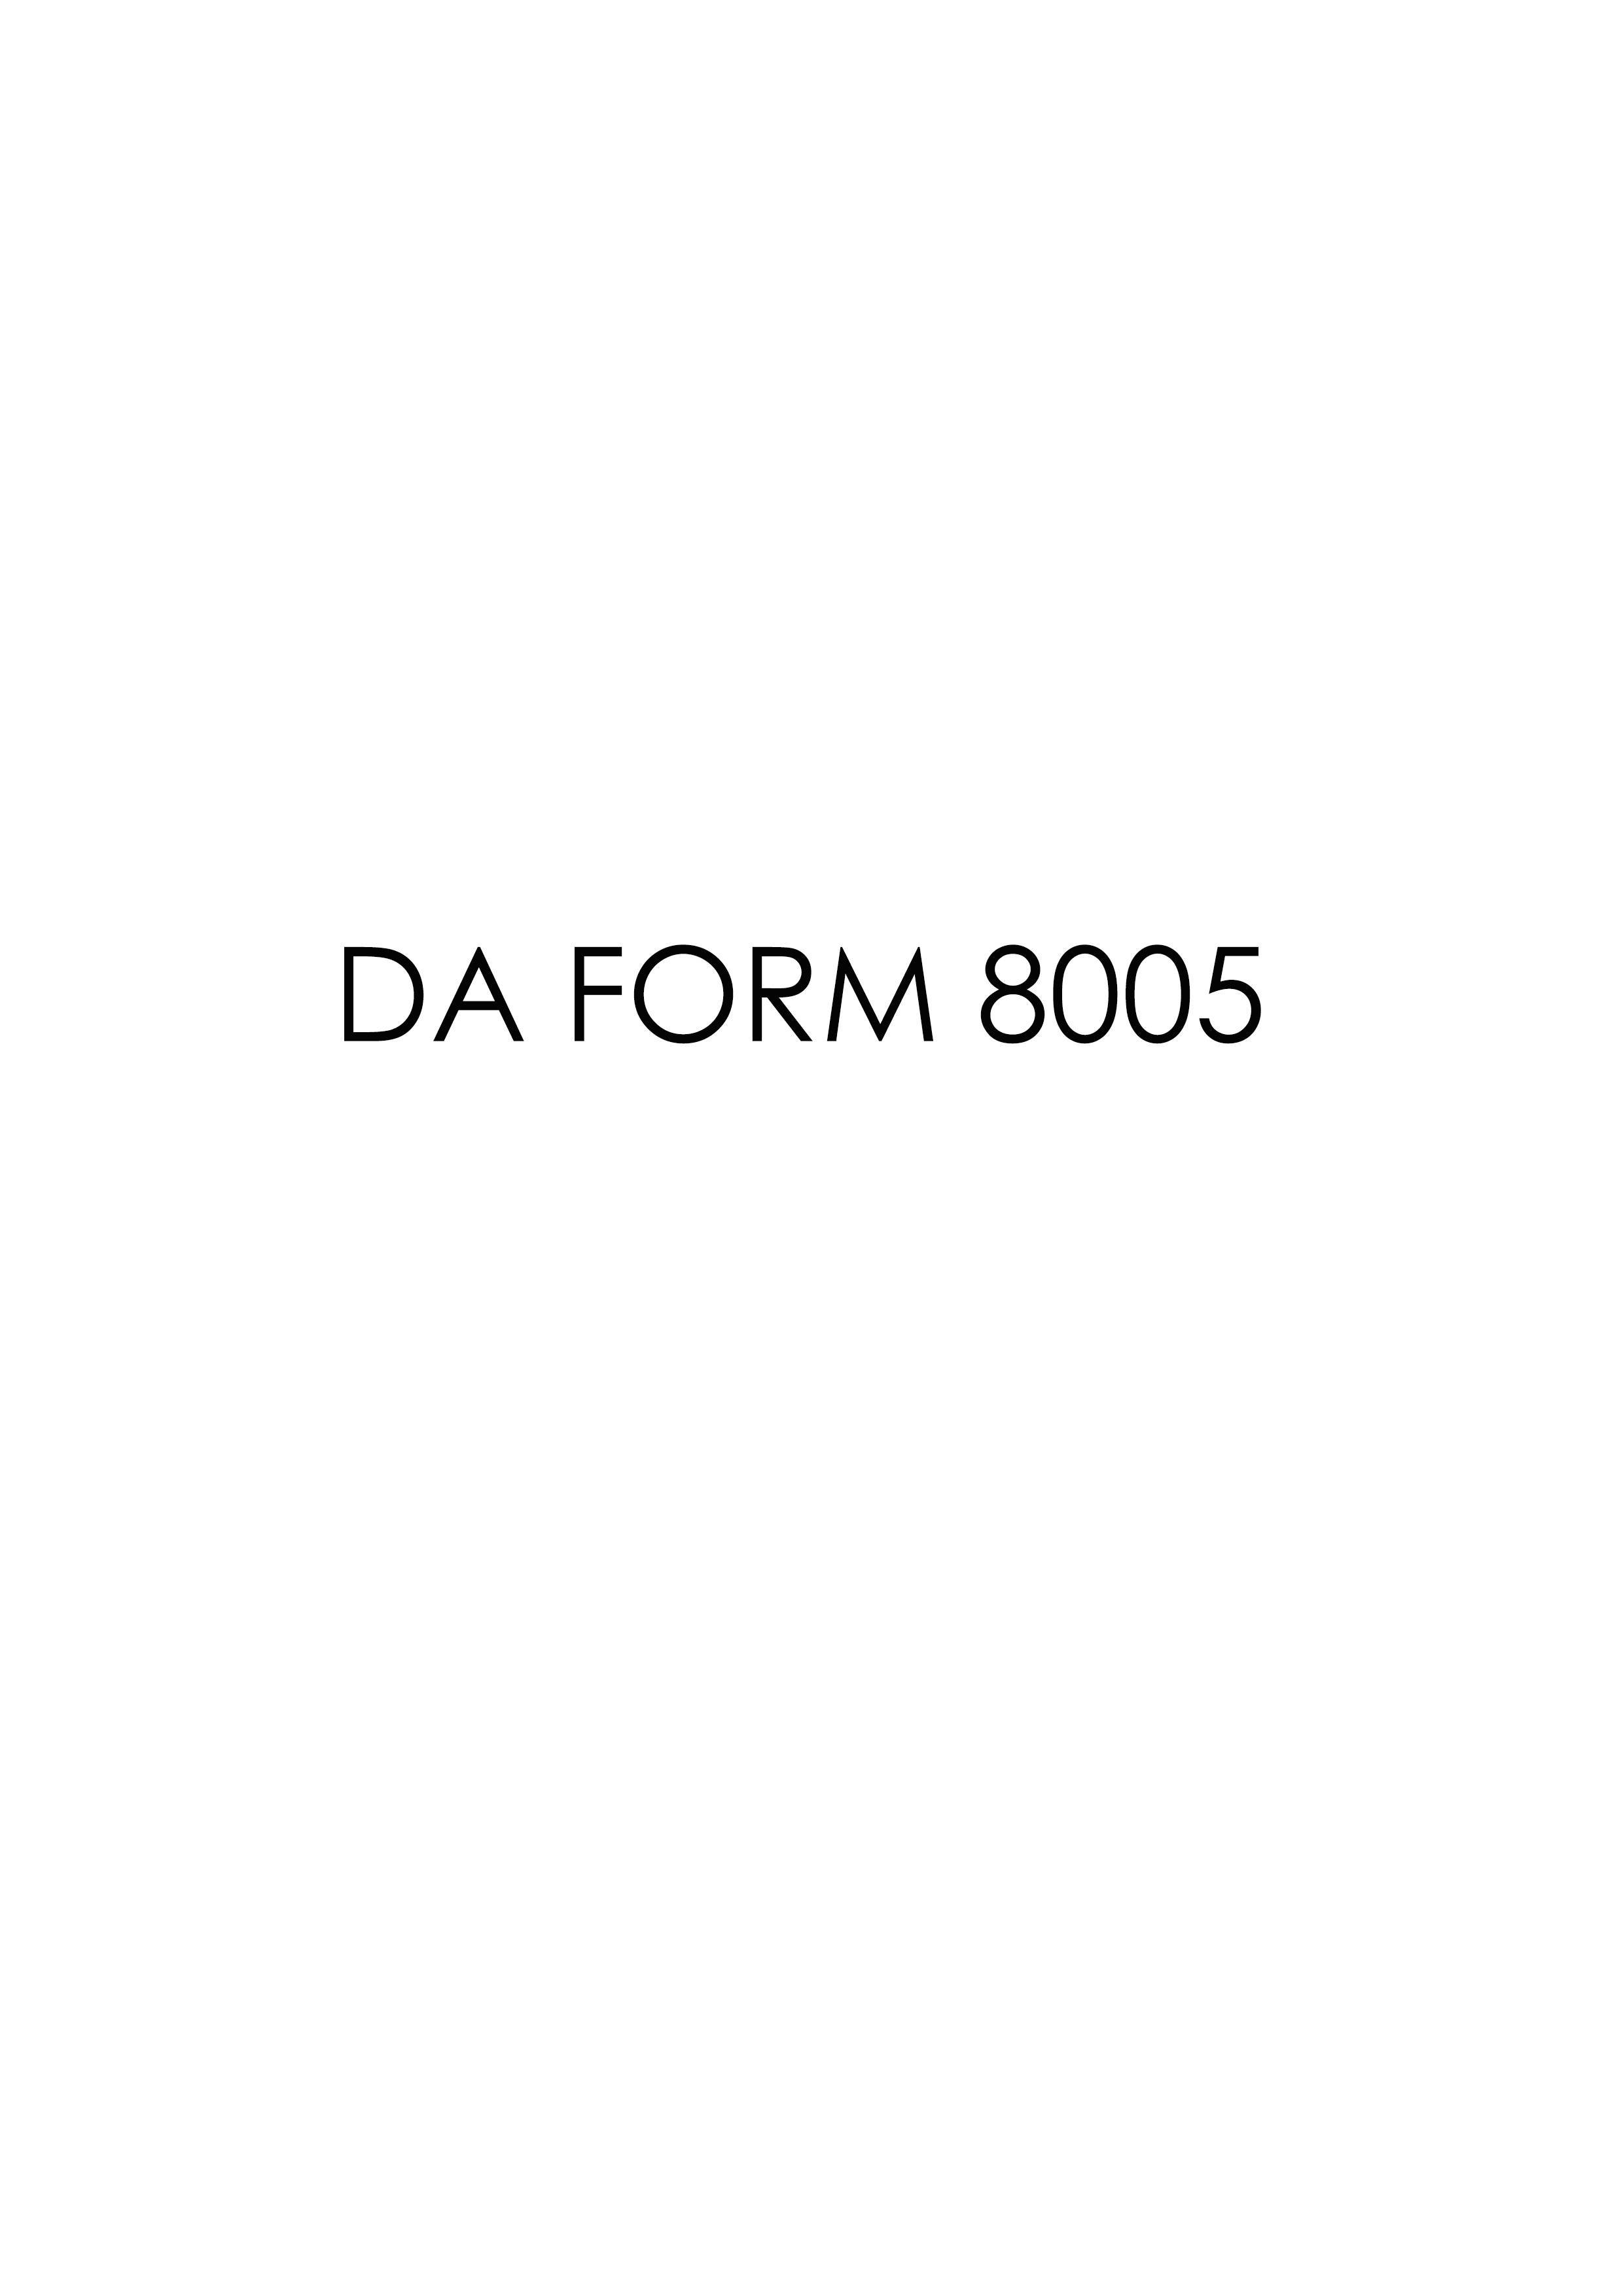 Download da form 8005